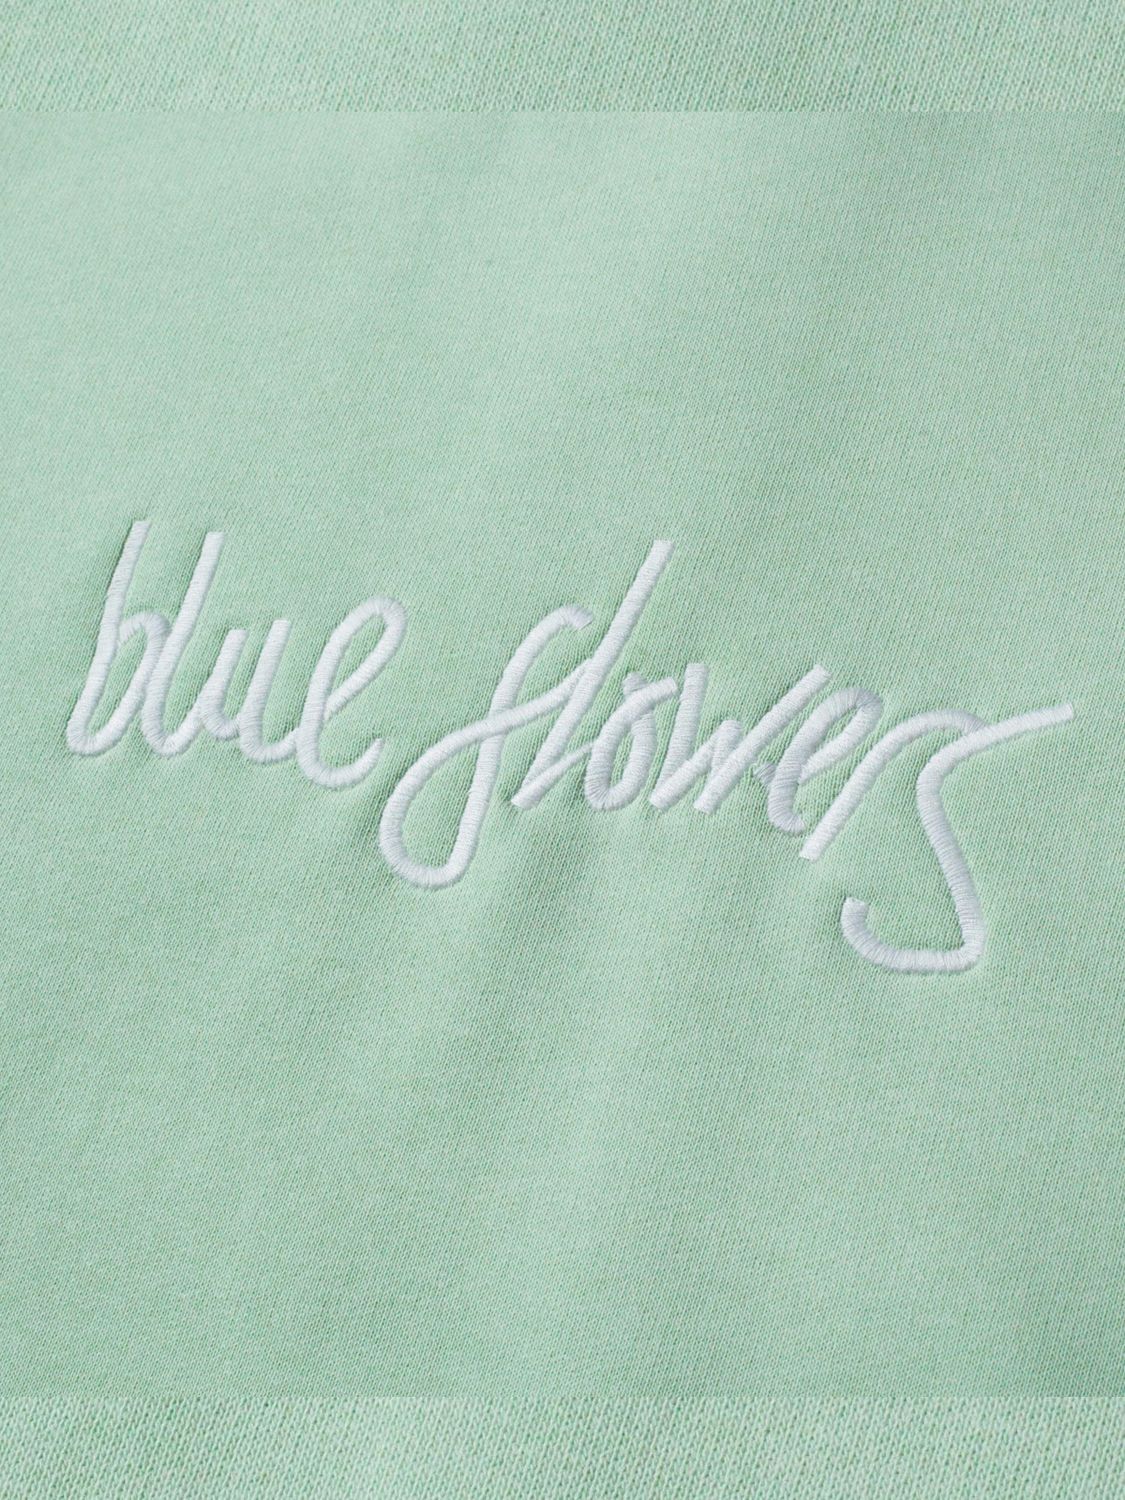 Buy Blue Flowers Pencraft Sweatshirt, Mint Green Online at johnlewis.com